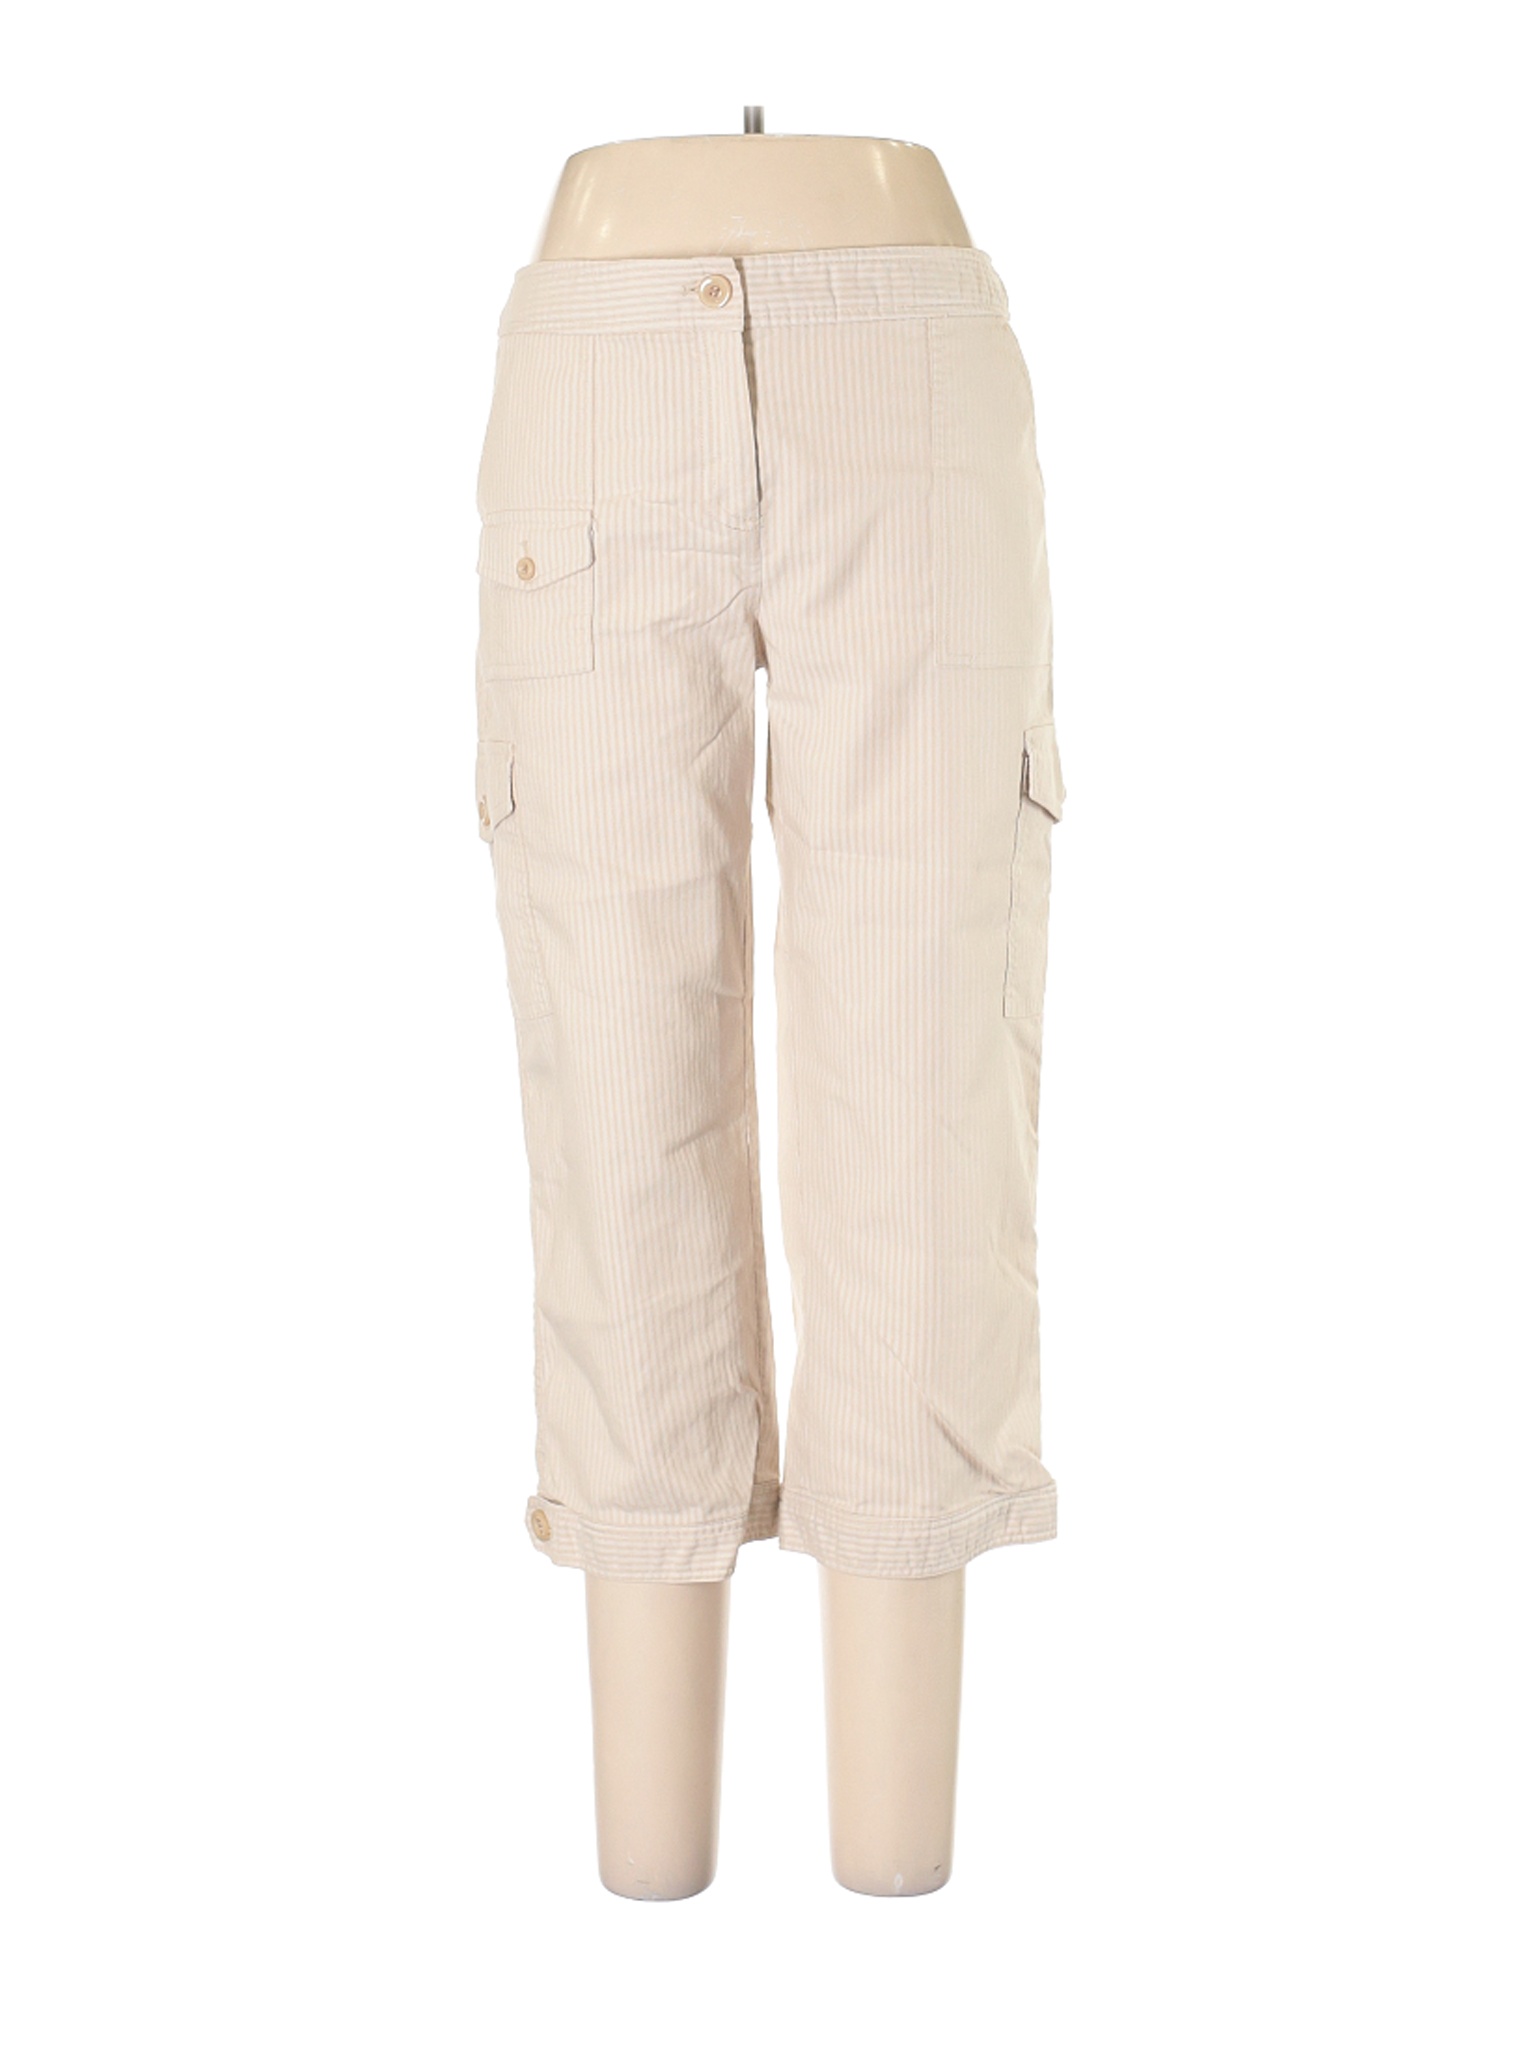 IZOD Women Ivory Cargo Pants 10 | eBay